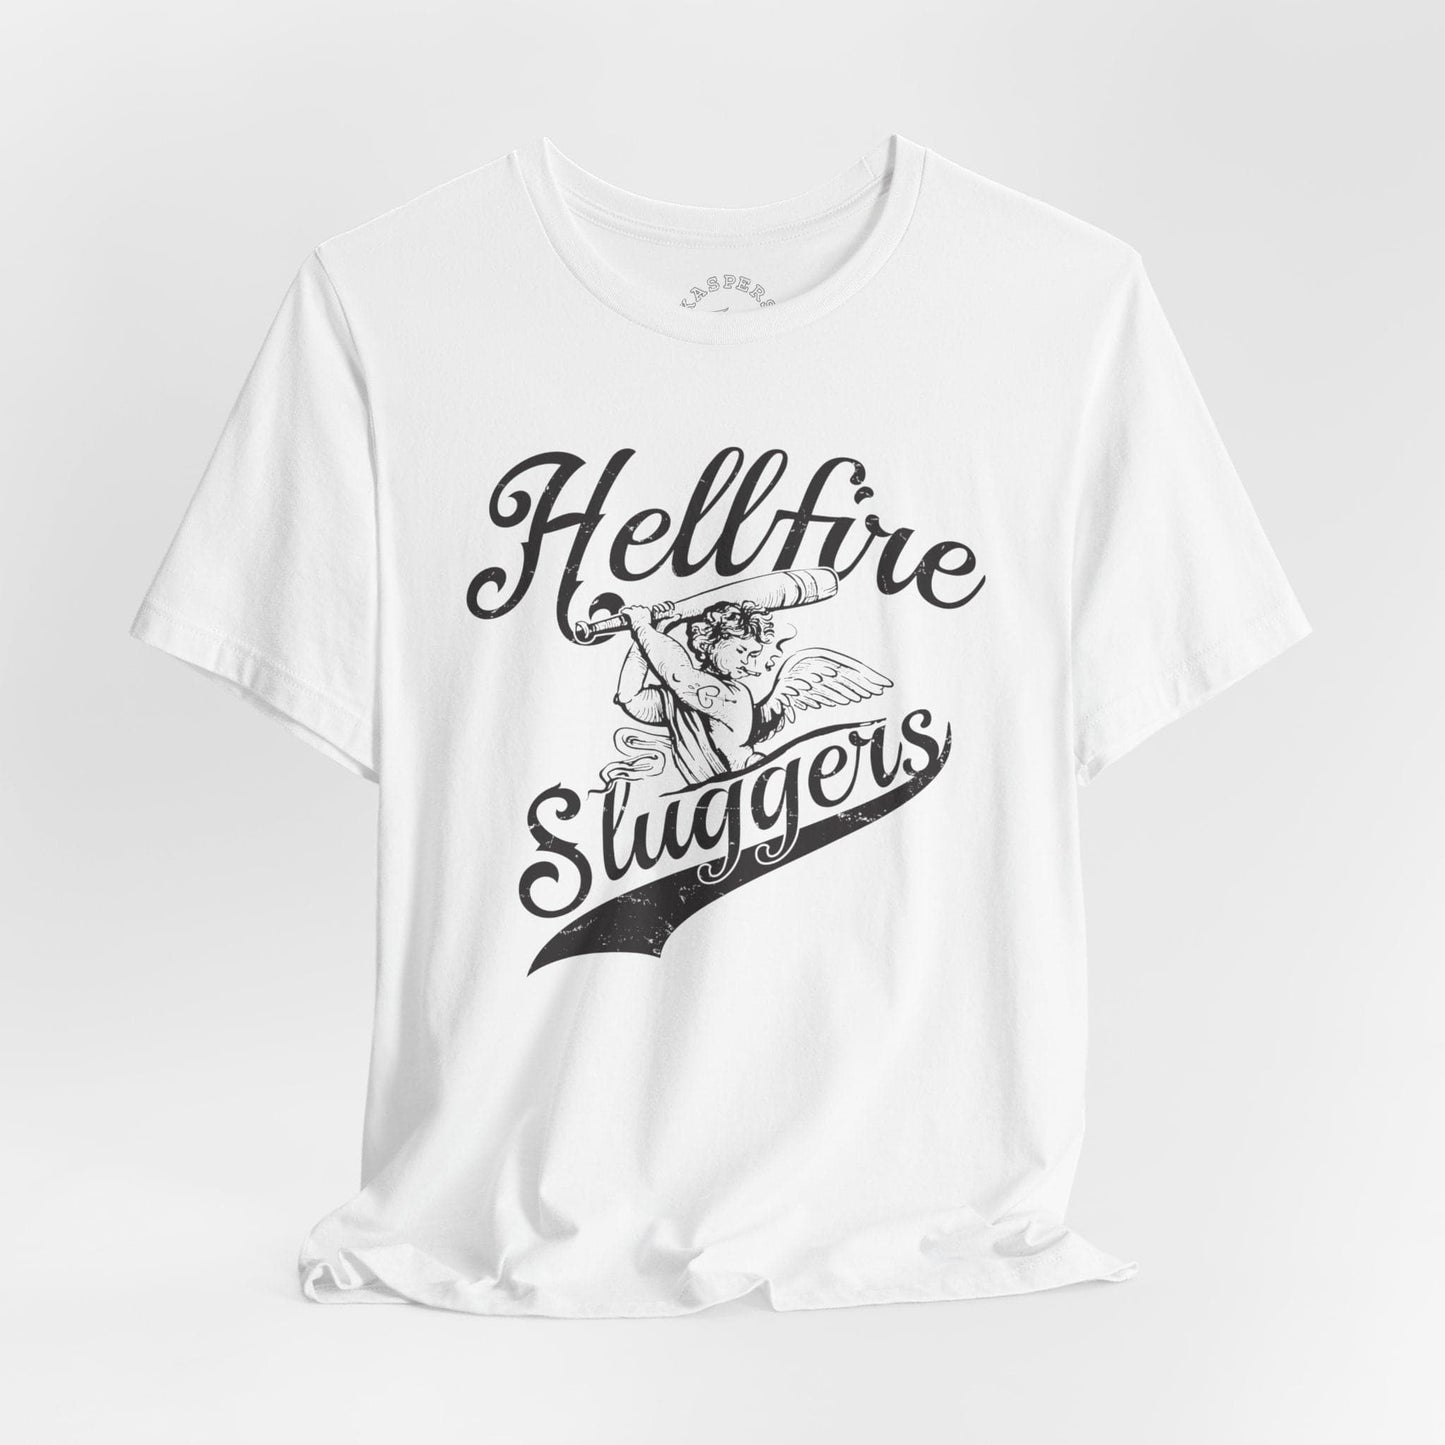 Hellfire Sluggers T-Shirt